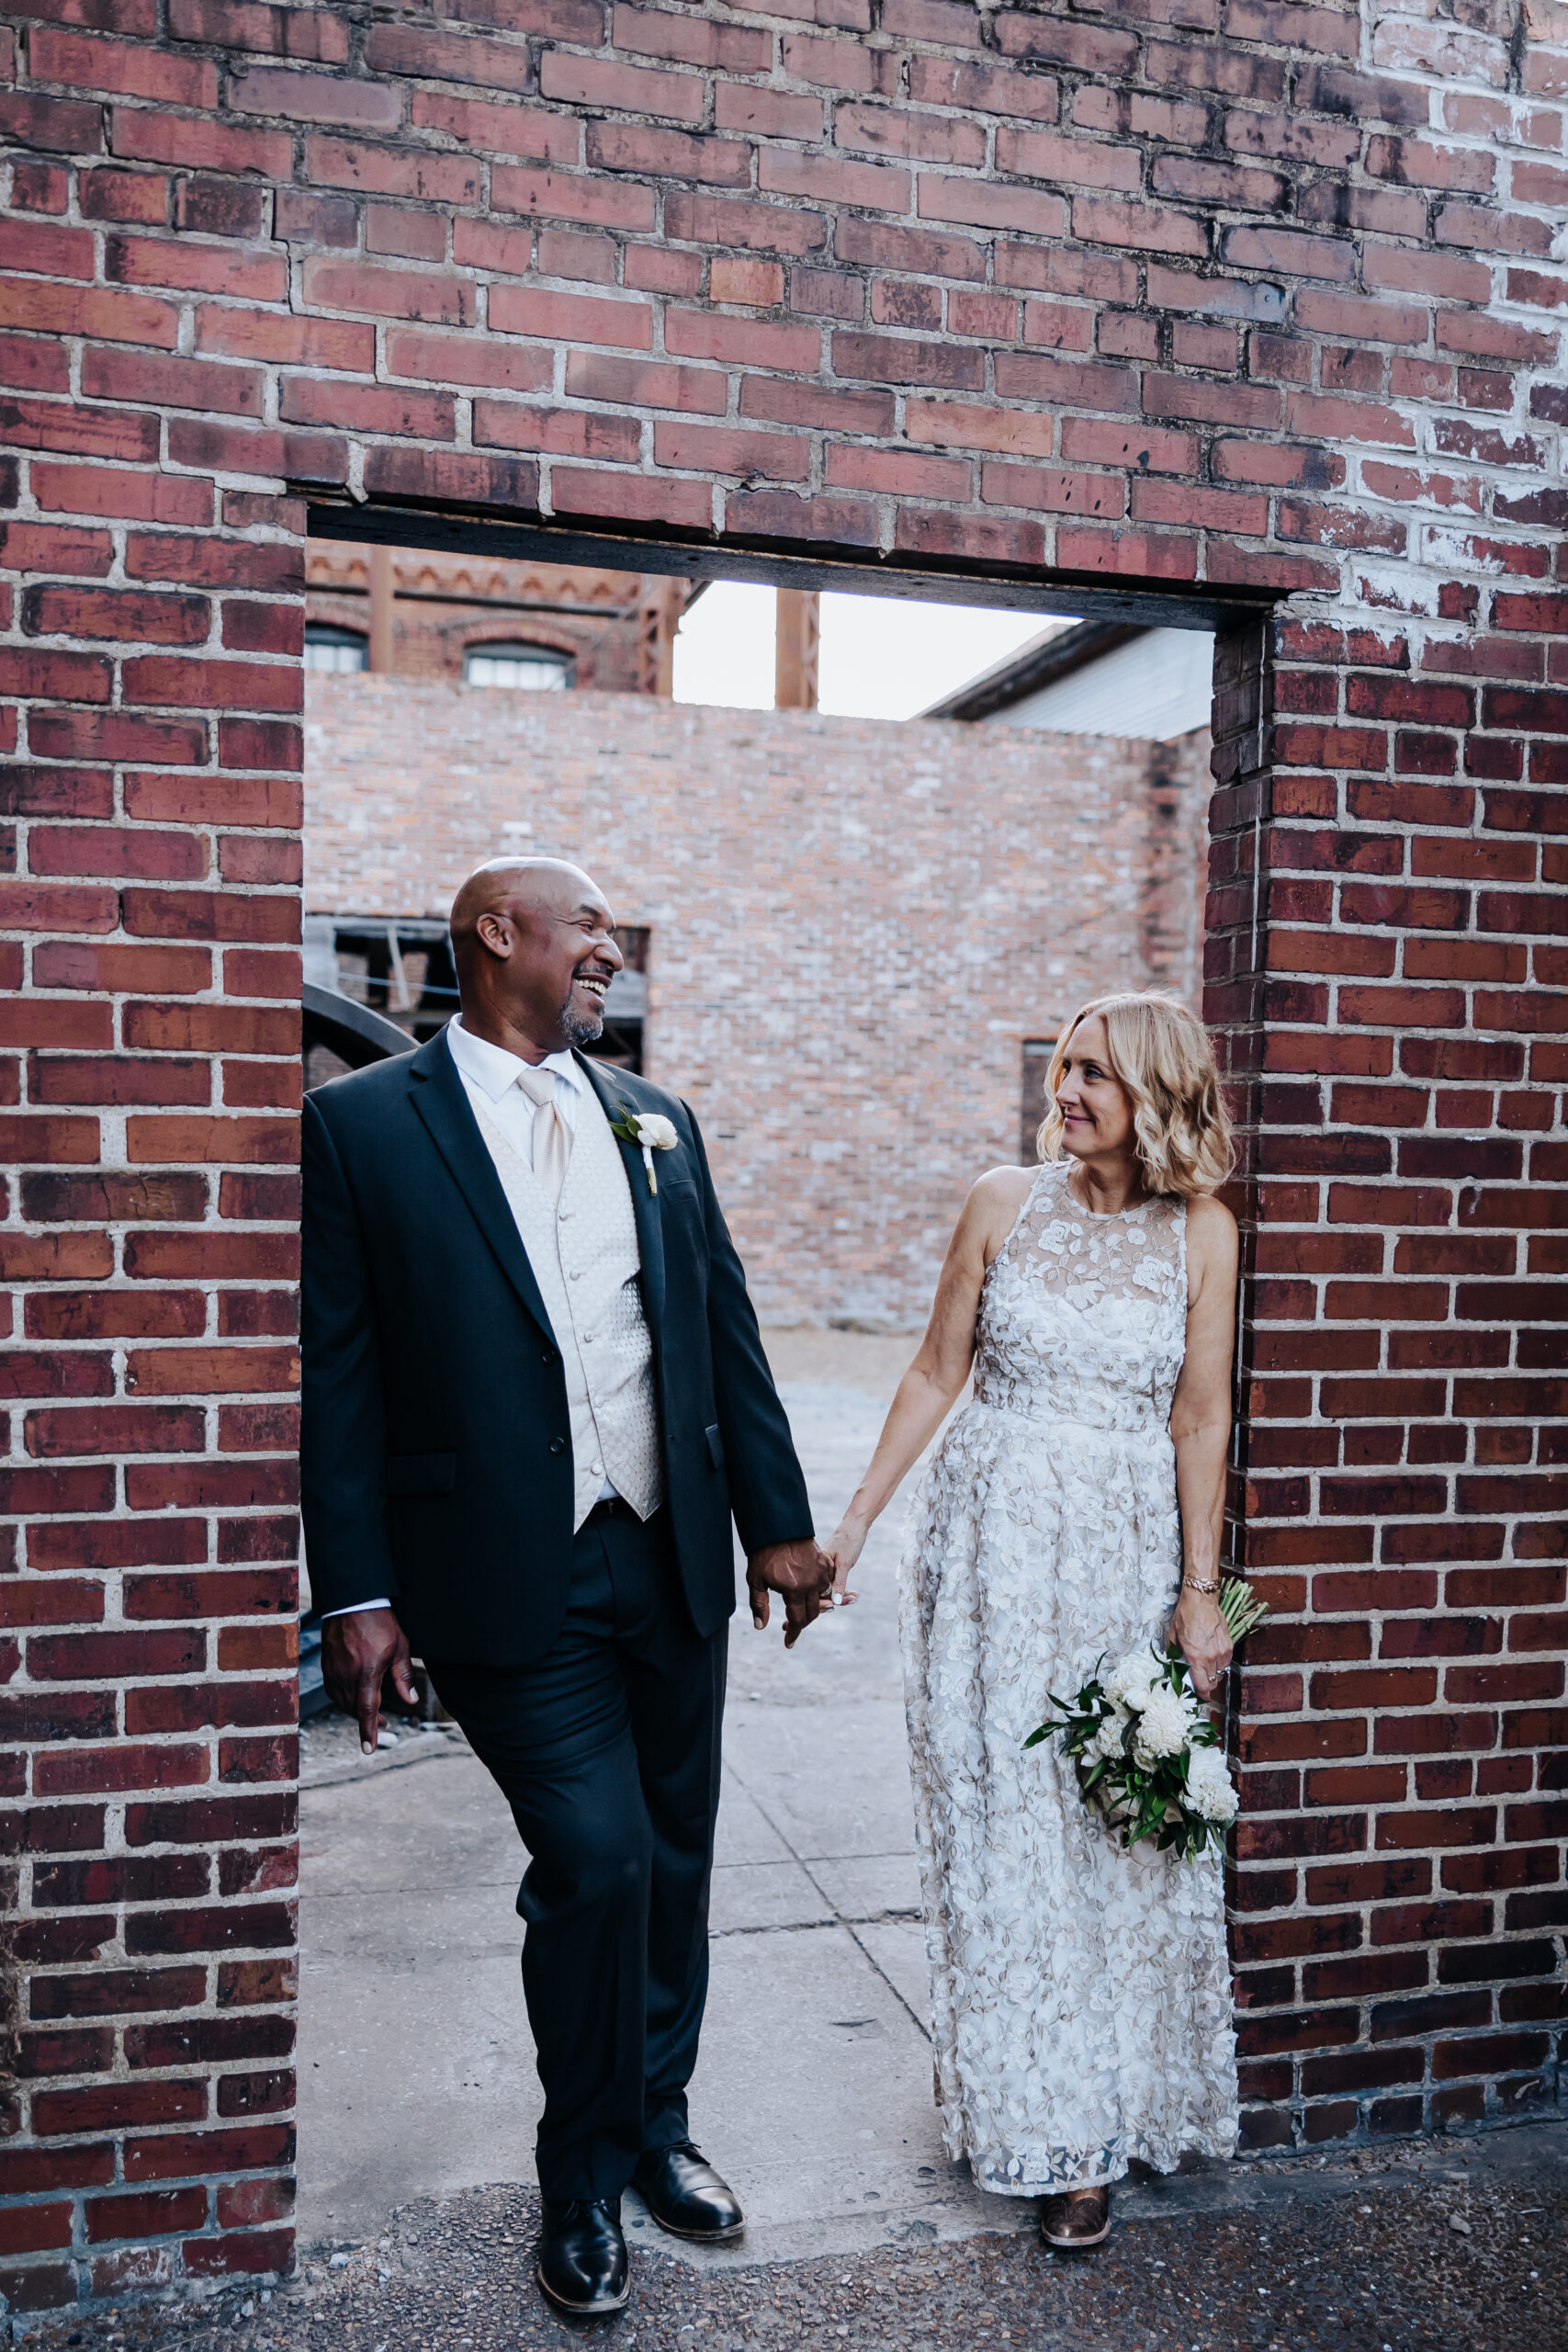 Destination elopement photographer captures bride and groom leaning against brick door holding hands